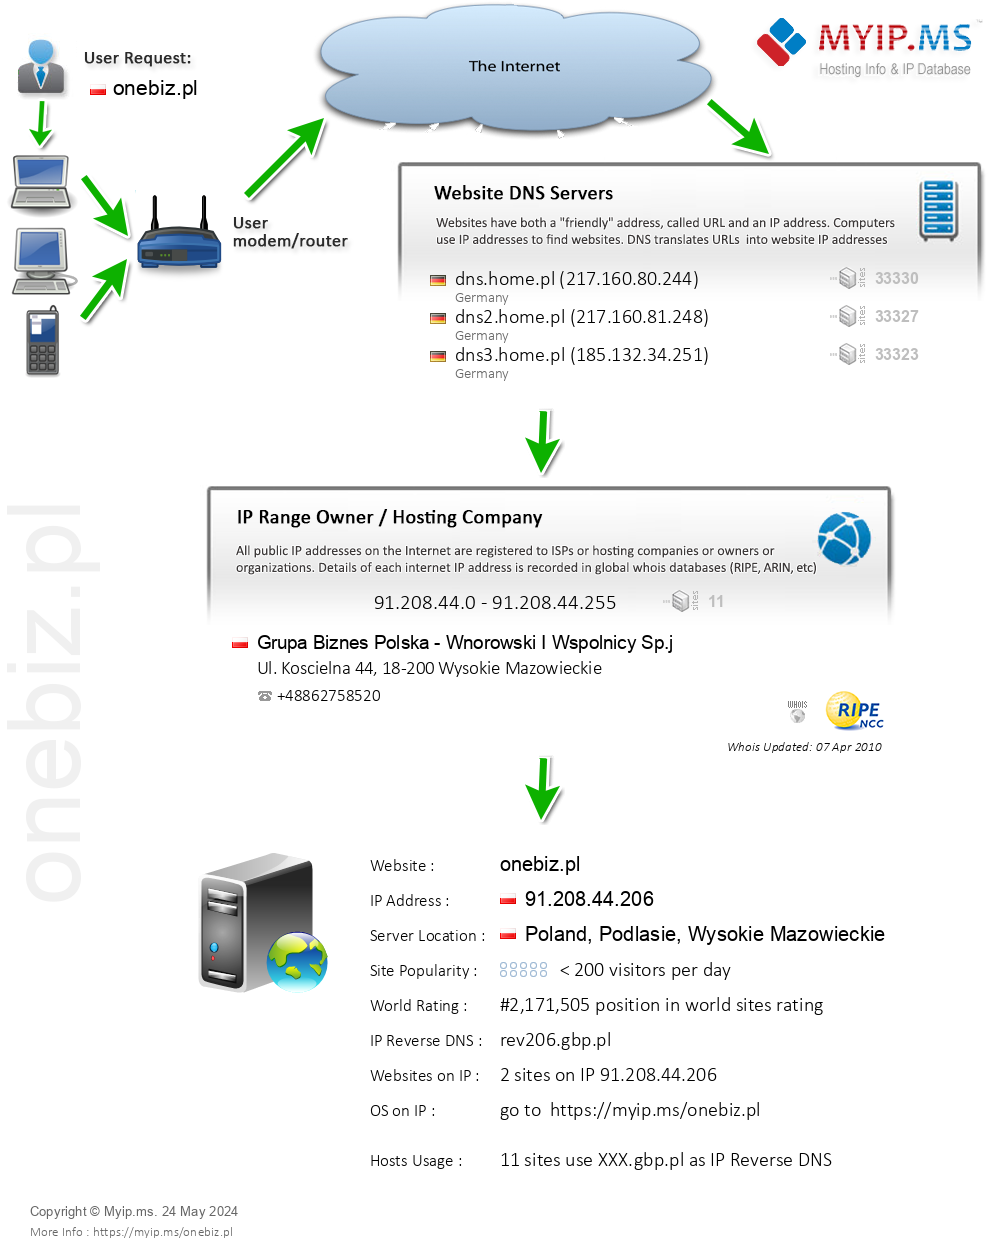 Onebiz.pl - Website Hosting Visual IP Diagram